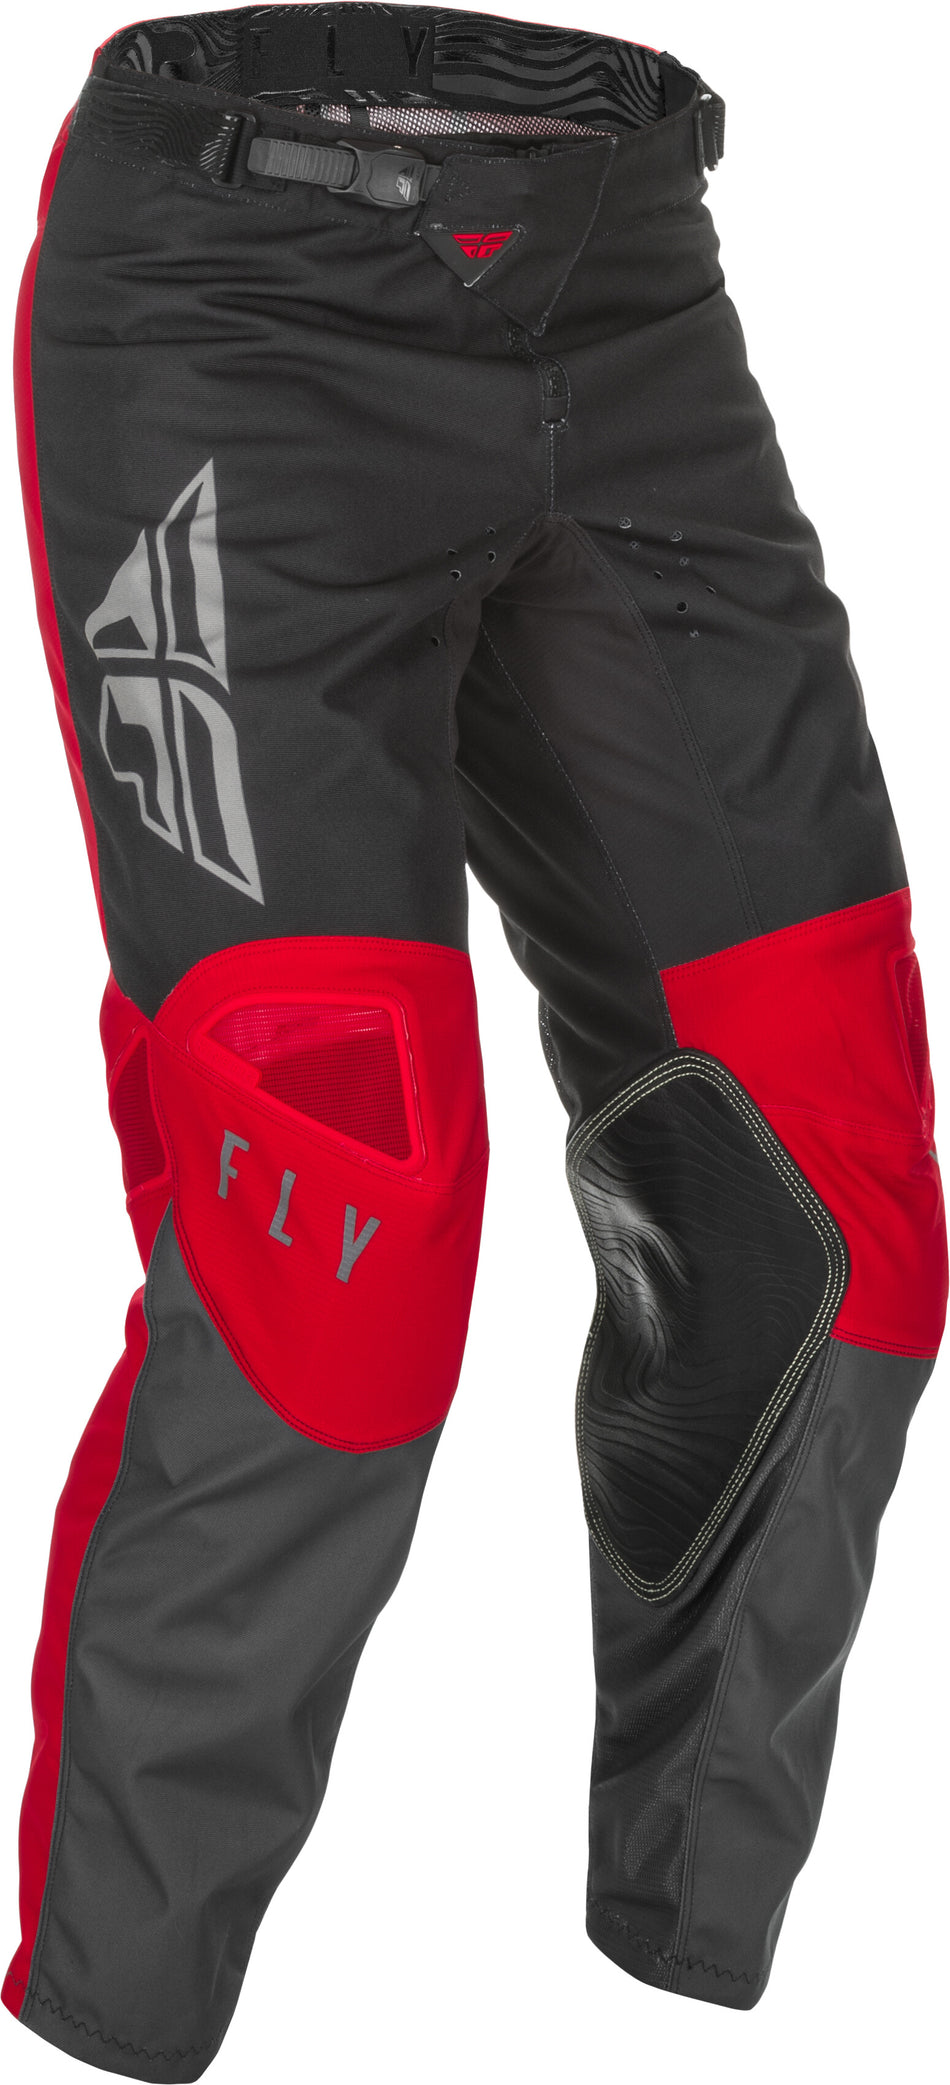 FLY RACING Kinetic K121 Pants Red/Grey/Black Sz 30 374-43230